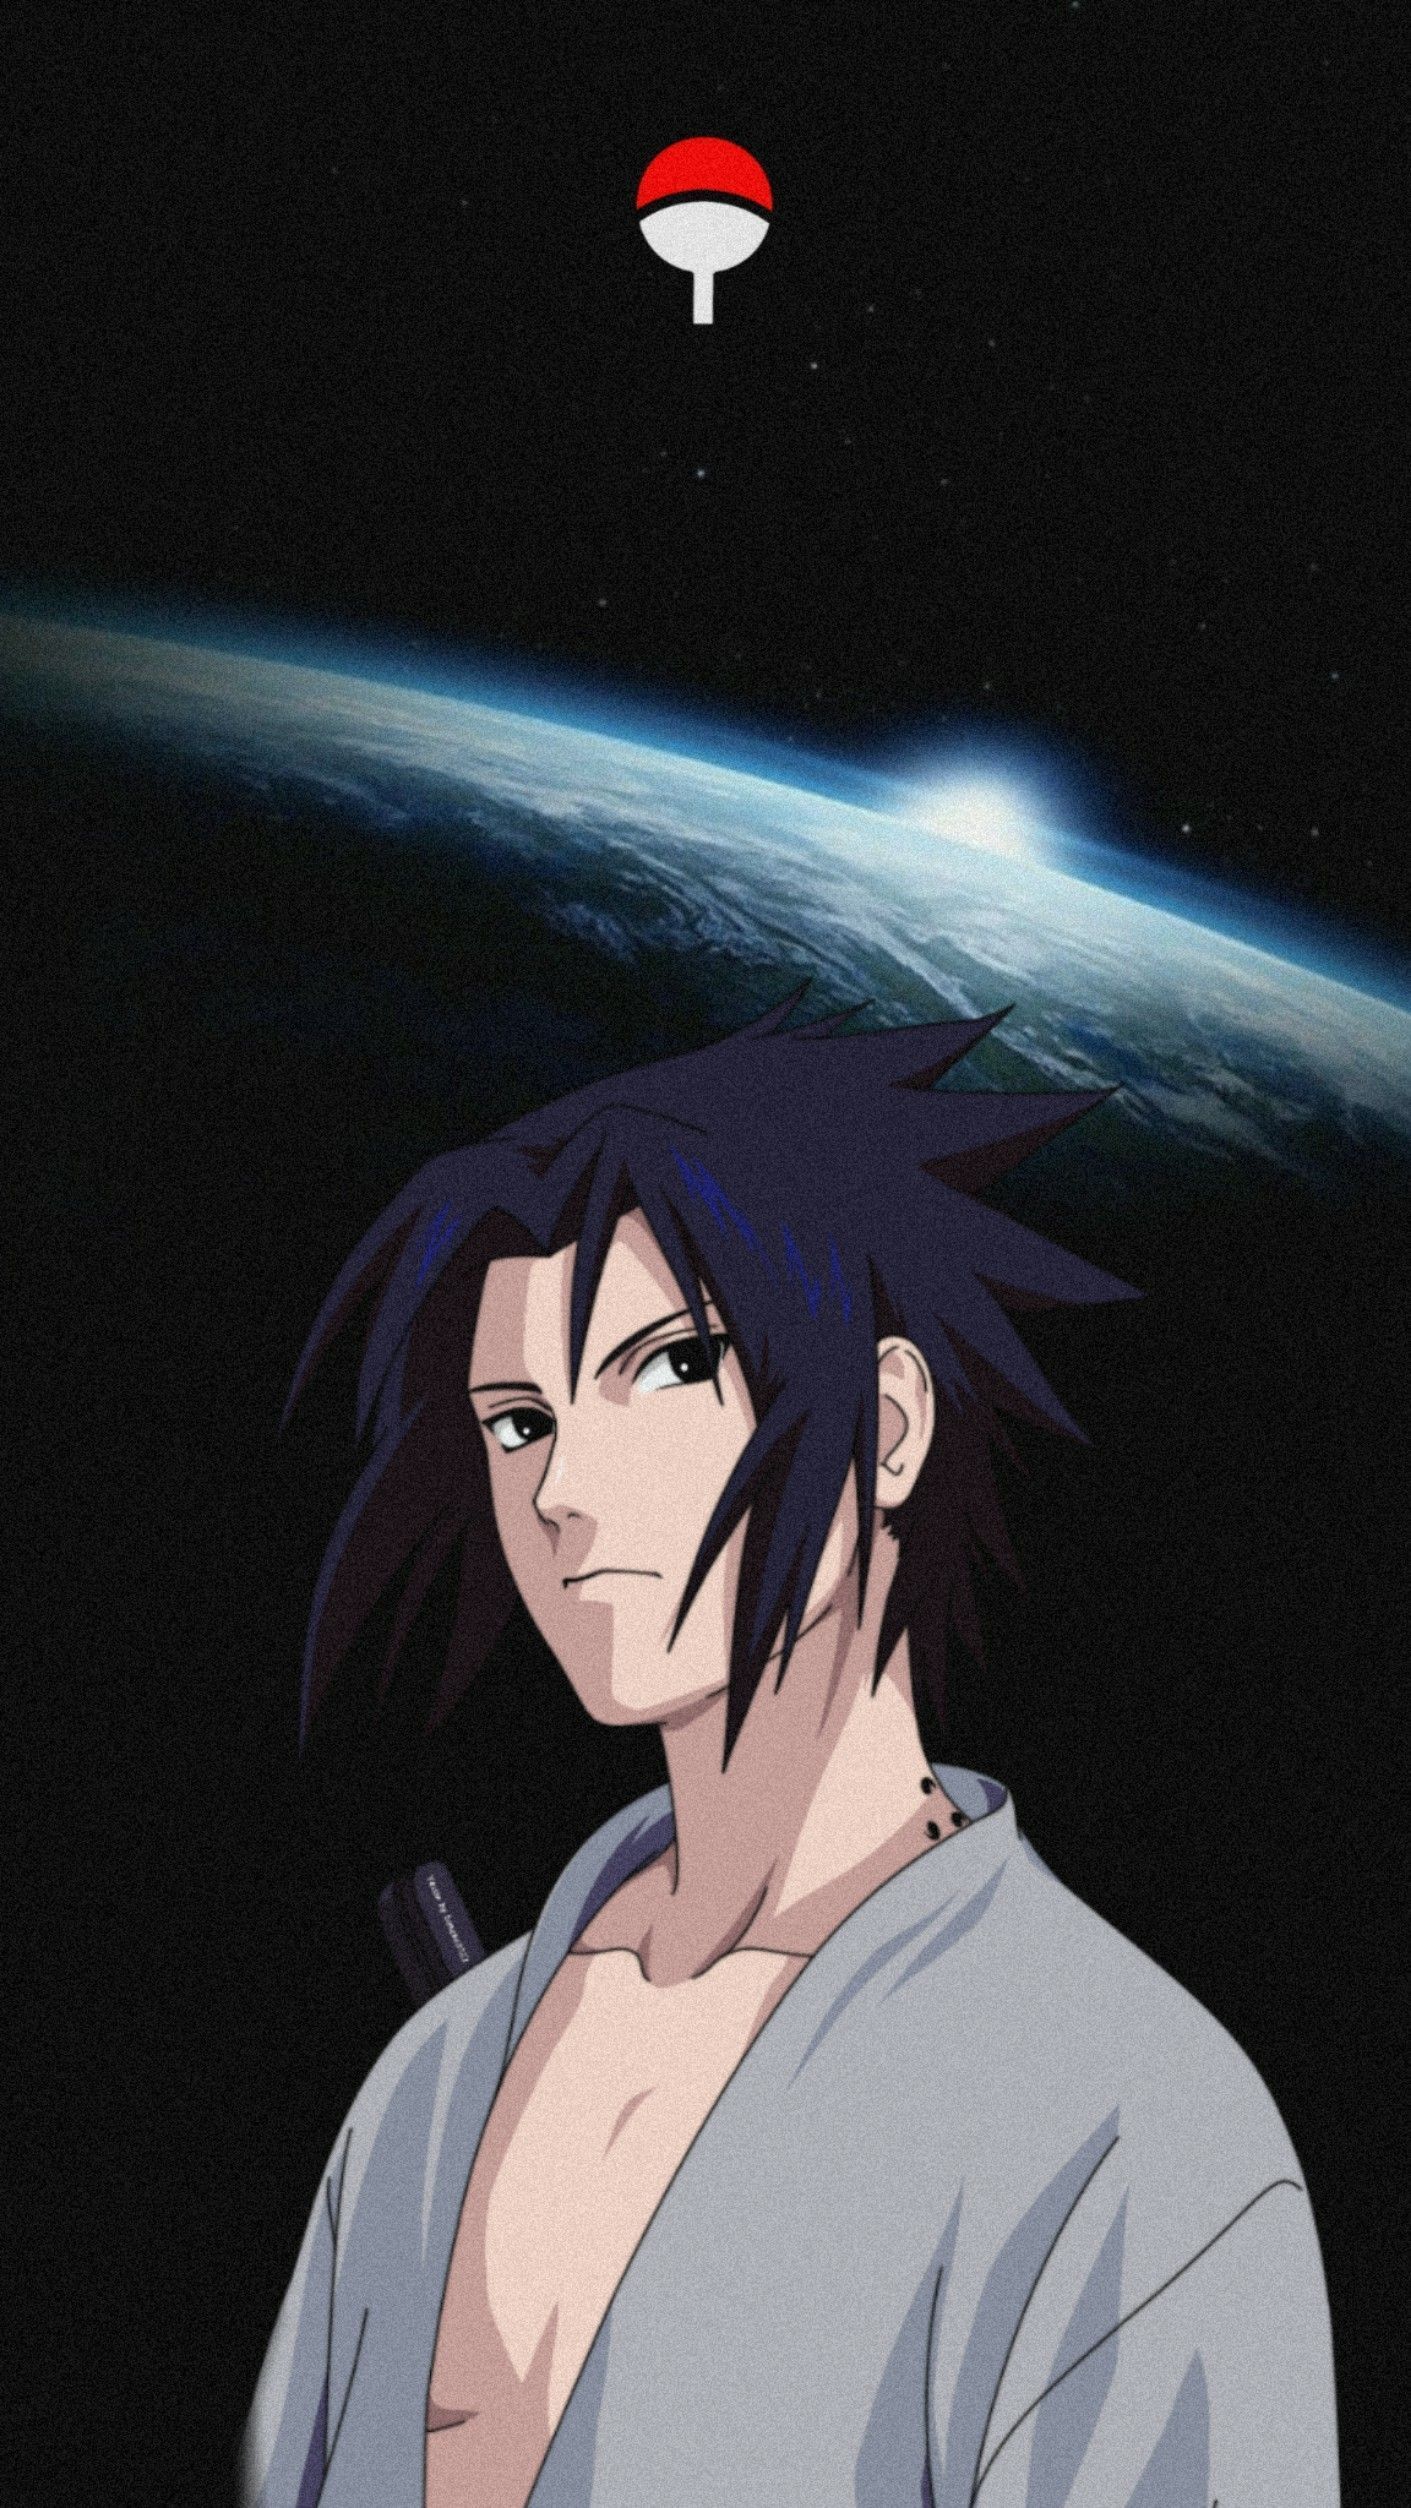 Sasuke classico render by Minato2002 on deviantART